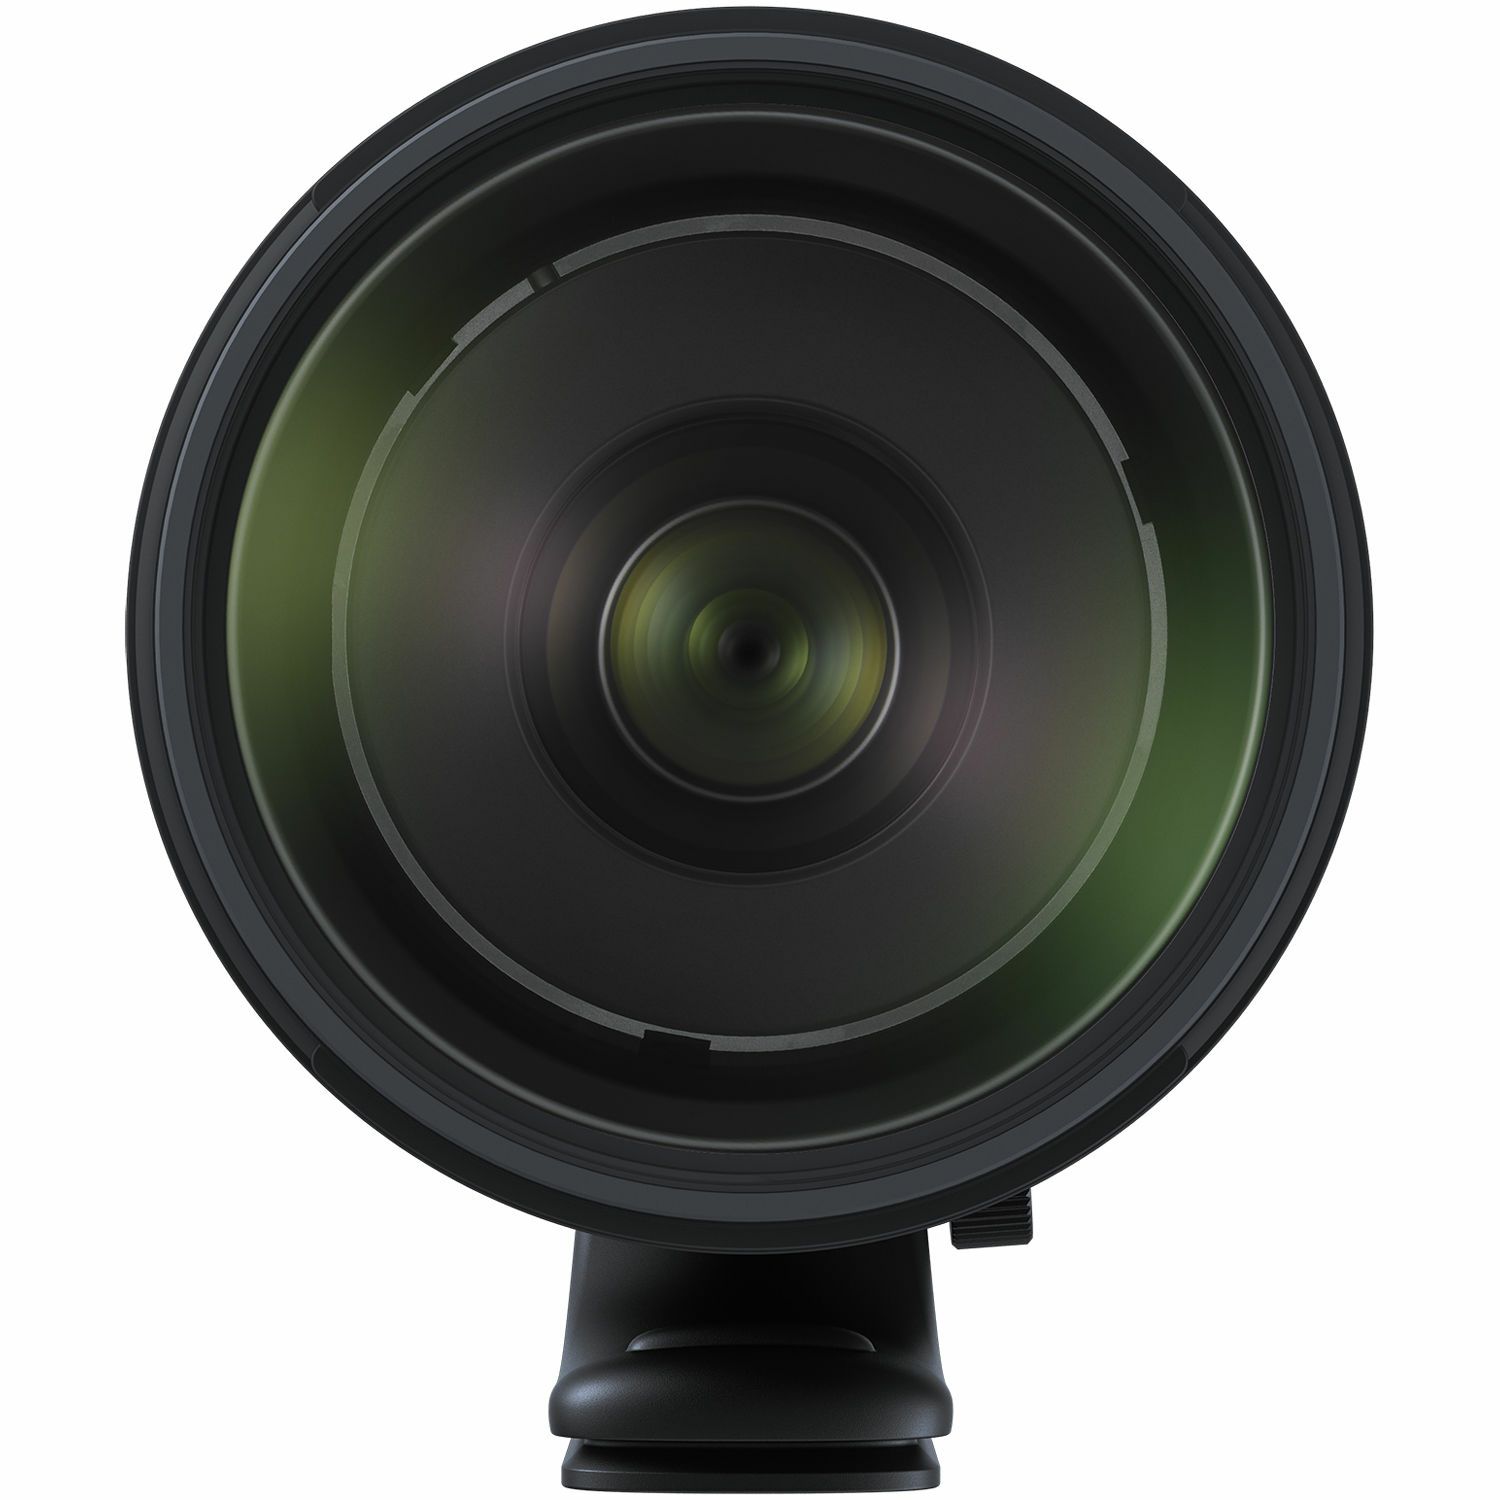 Tamron SP AF 150-600mm f/5-6.3 Di USD G2 telefoto objektiv za Sony A-mount (A022S)